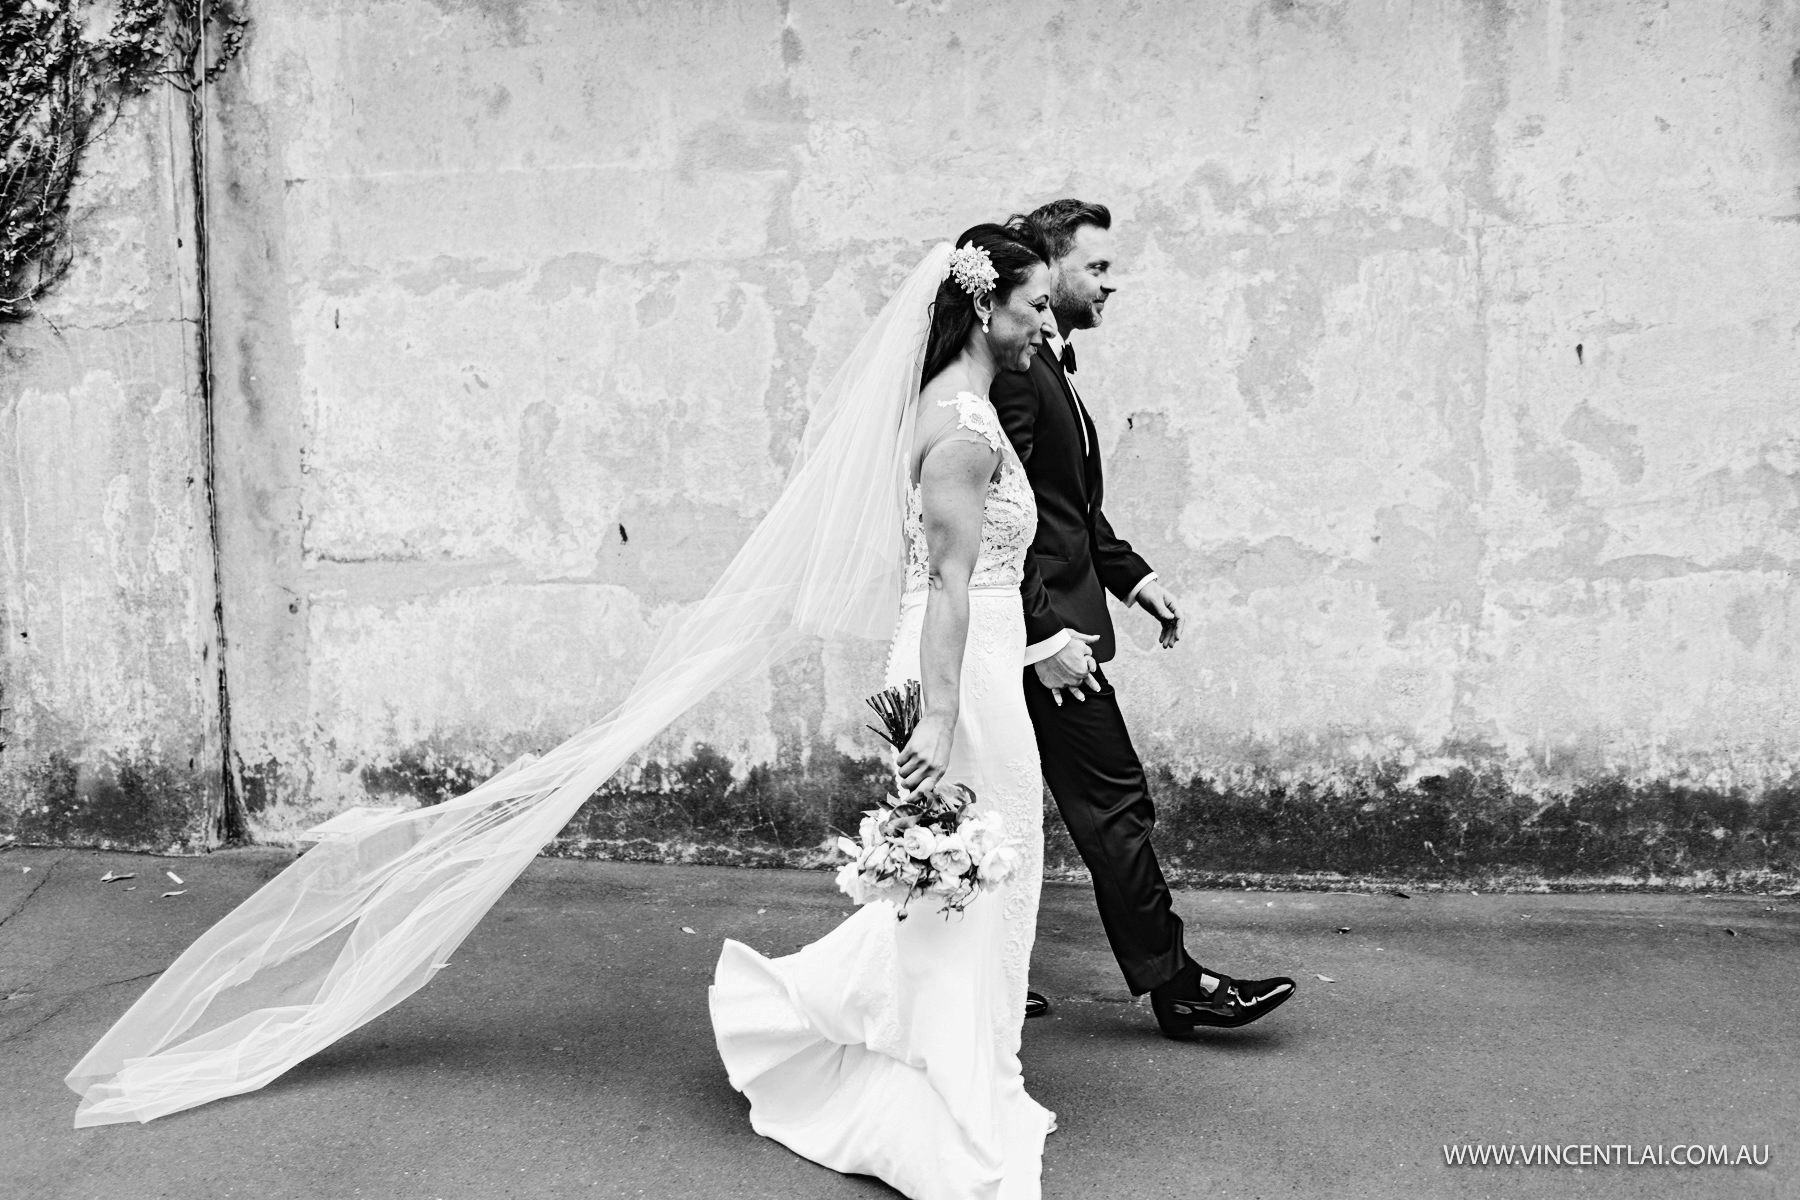 Sydney Award Winning Wedding Photographer